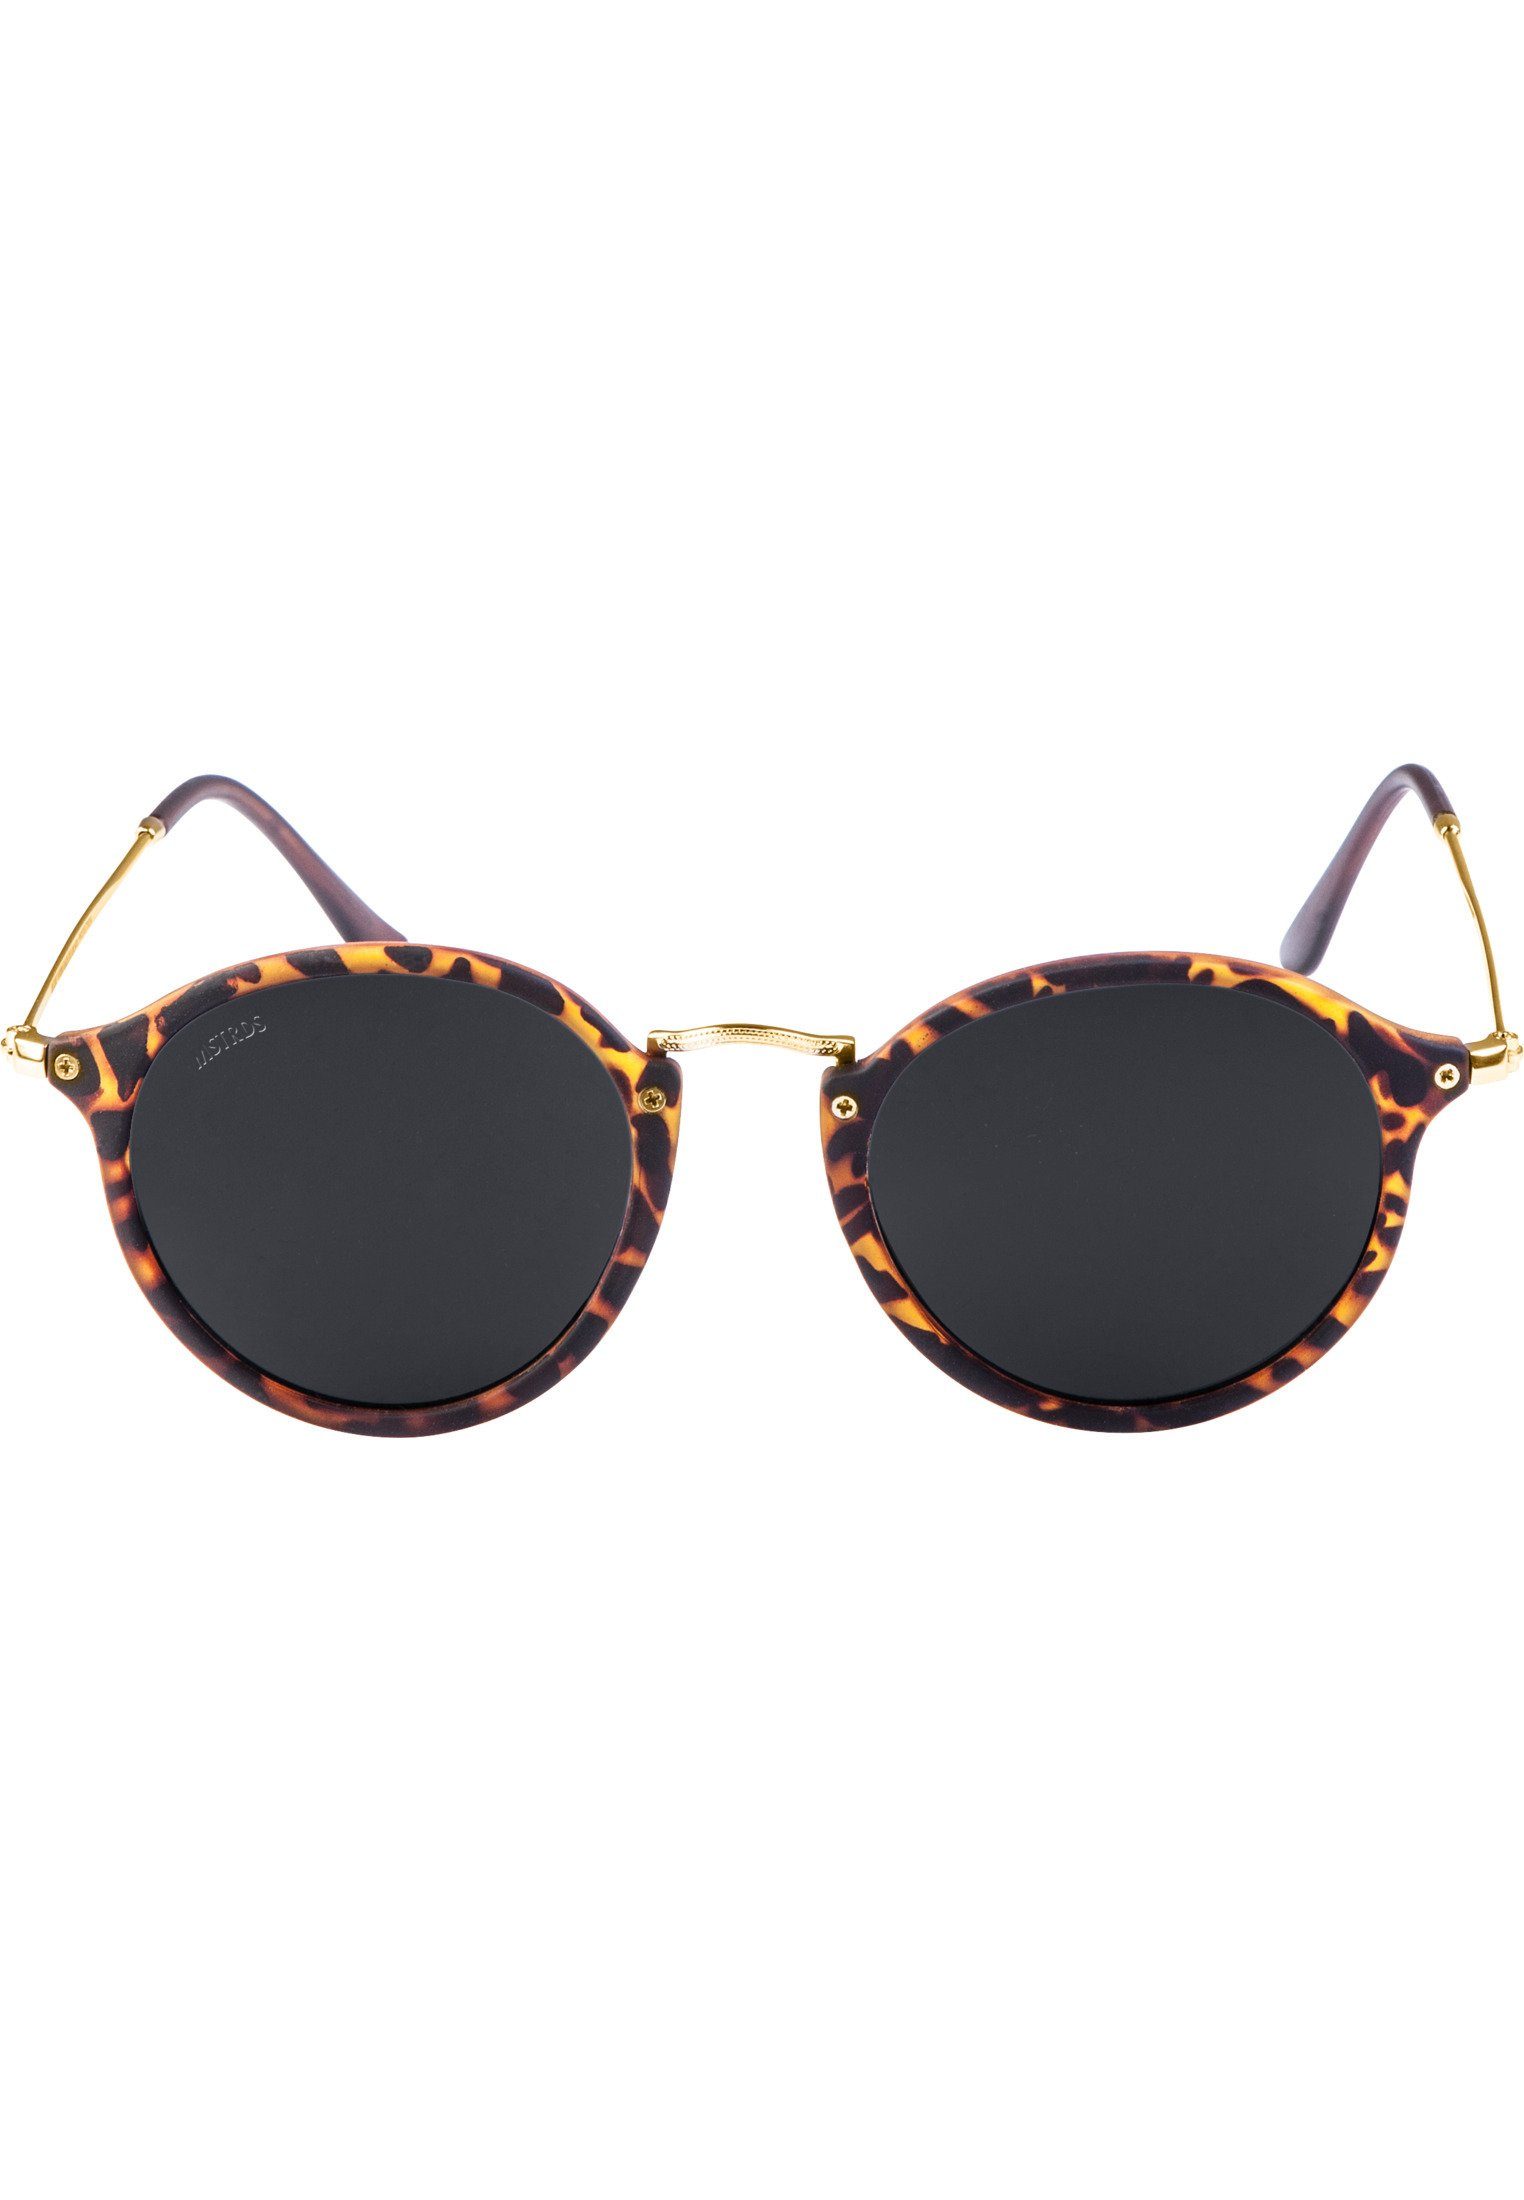 MSTRDS Sonnenbrille Spy Sunglasses Accessoires havanna/grey